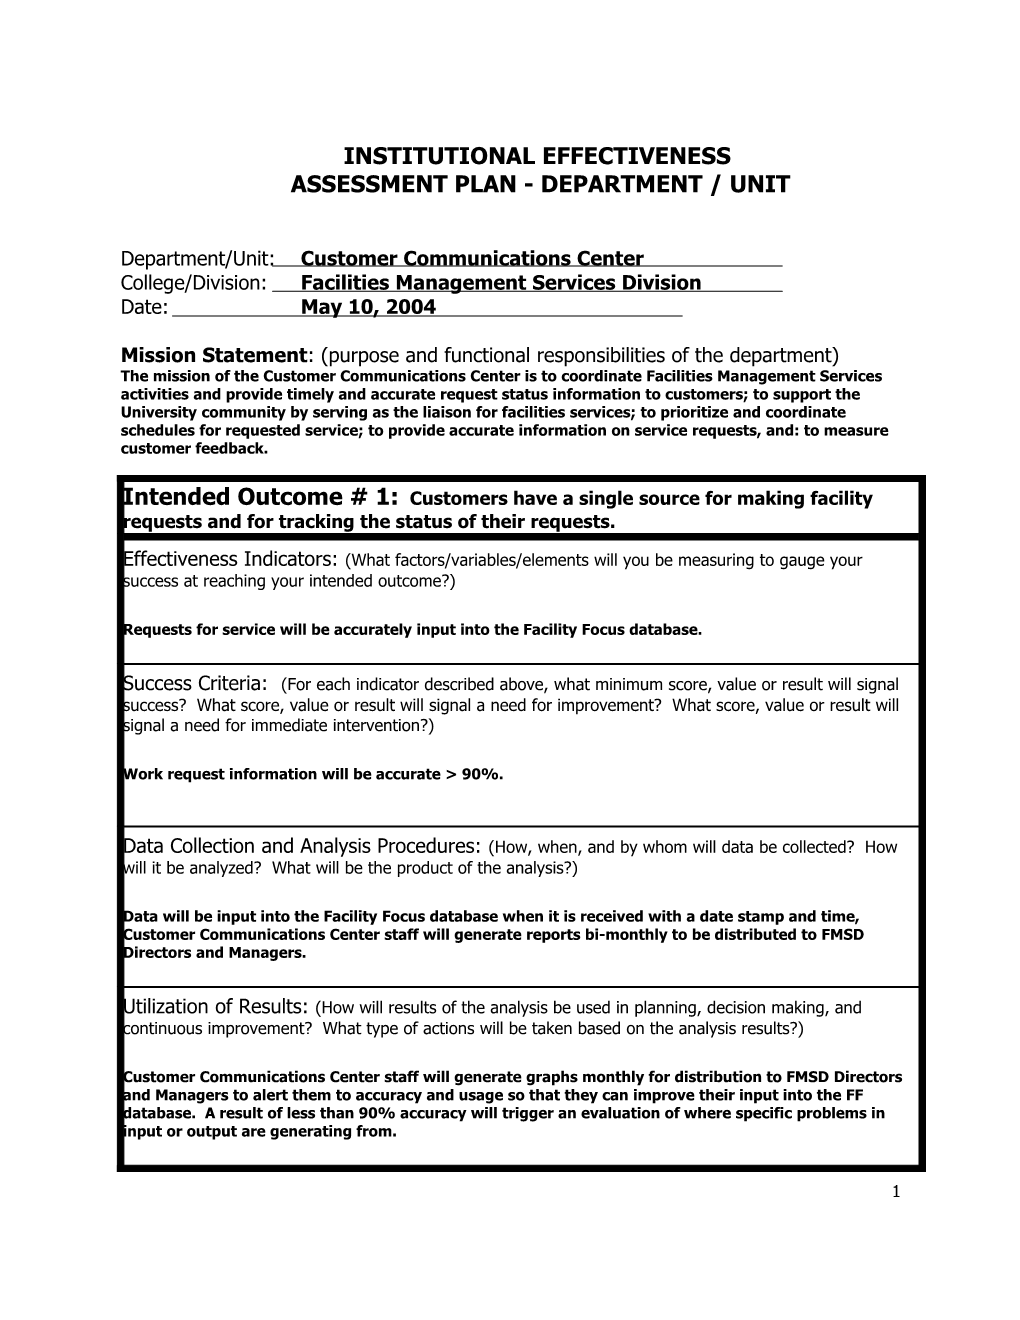 Assessment Plan - Department / Unit